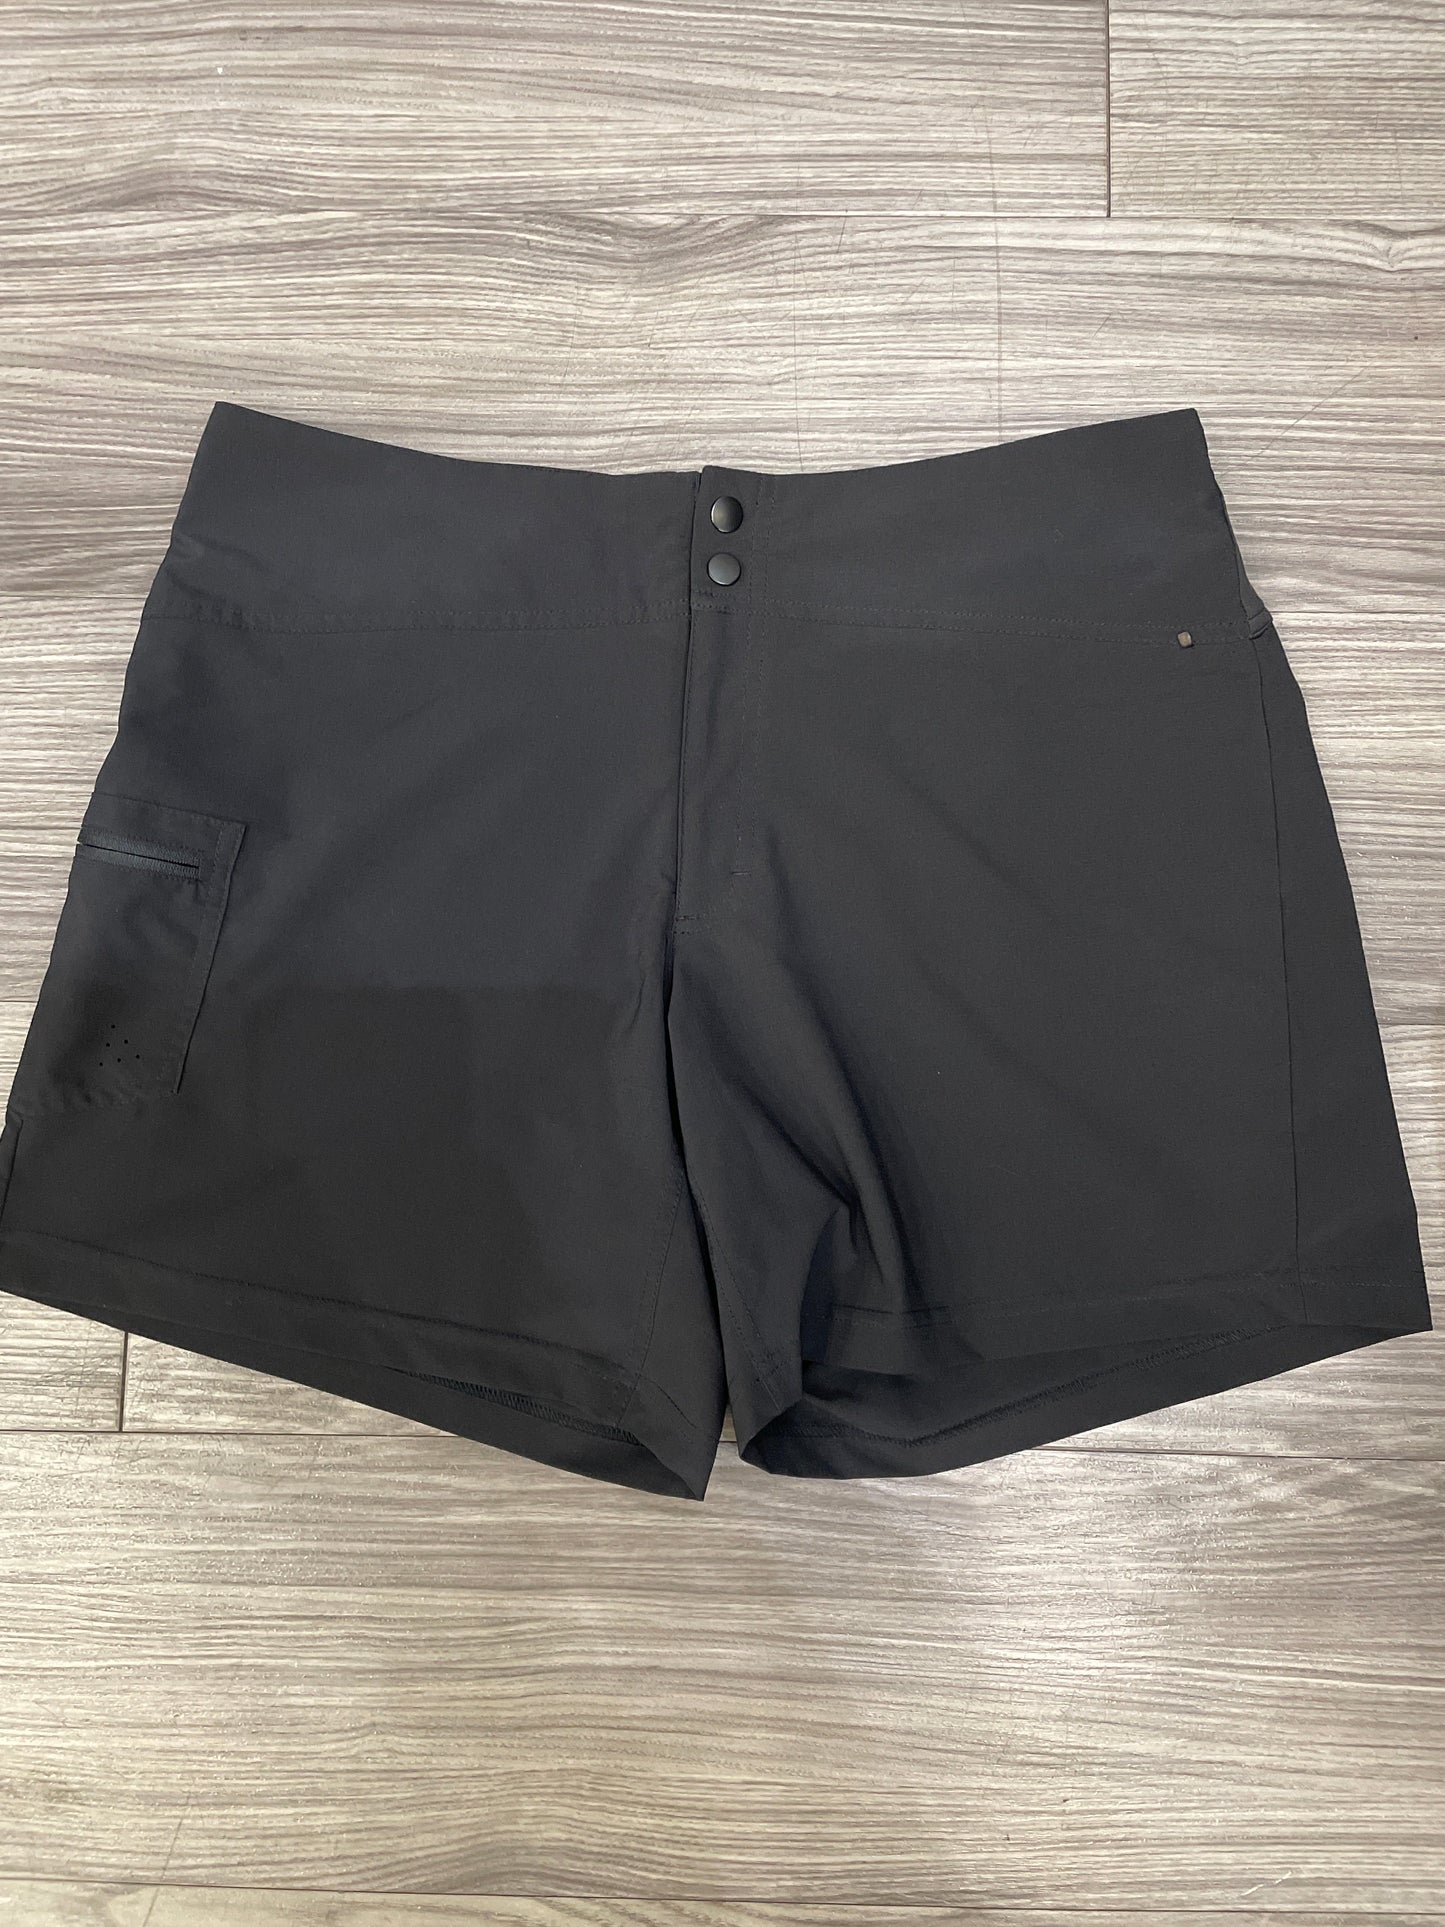 Black Shorts Avalanche, Size L